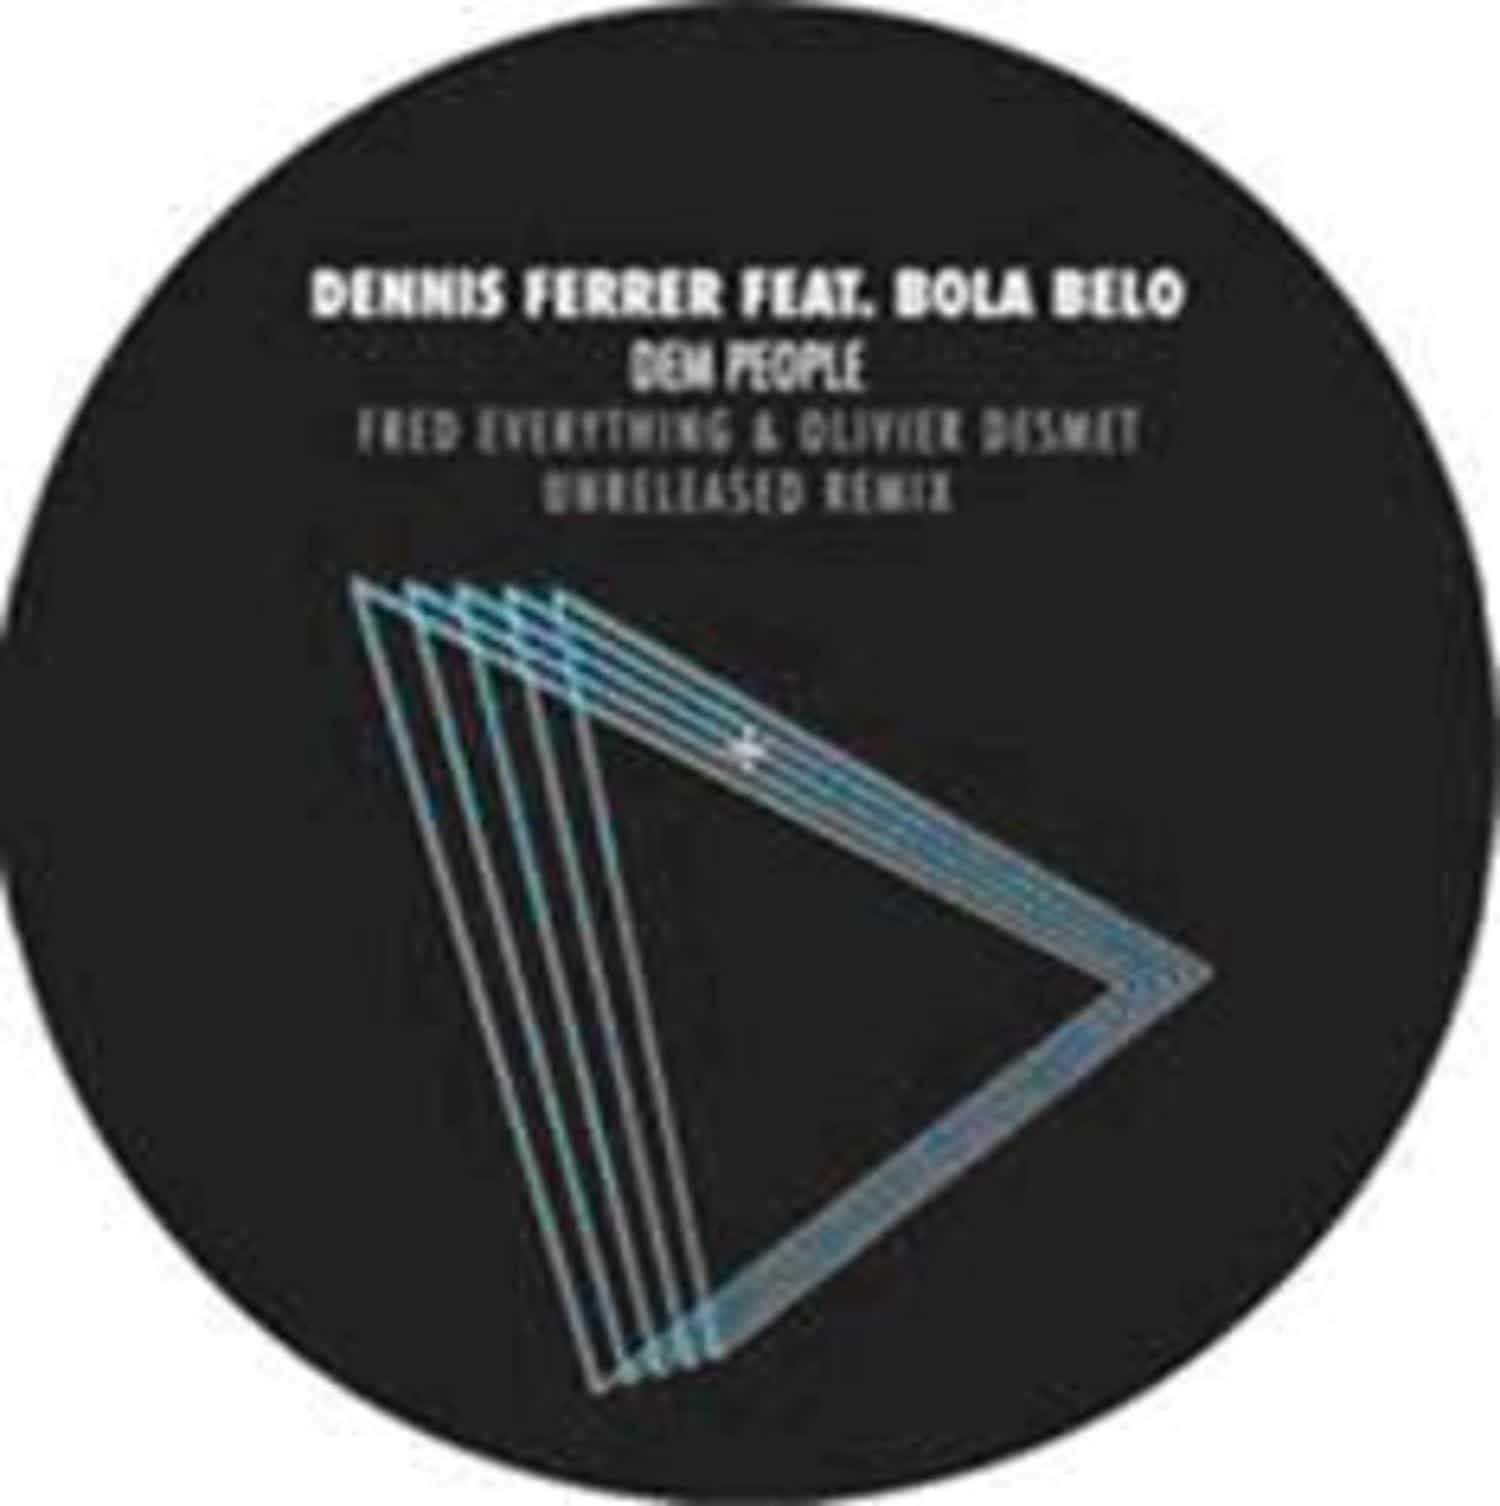 Dennis Ferrer Feat. Bola Belo - DEM PEOPLE RMX